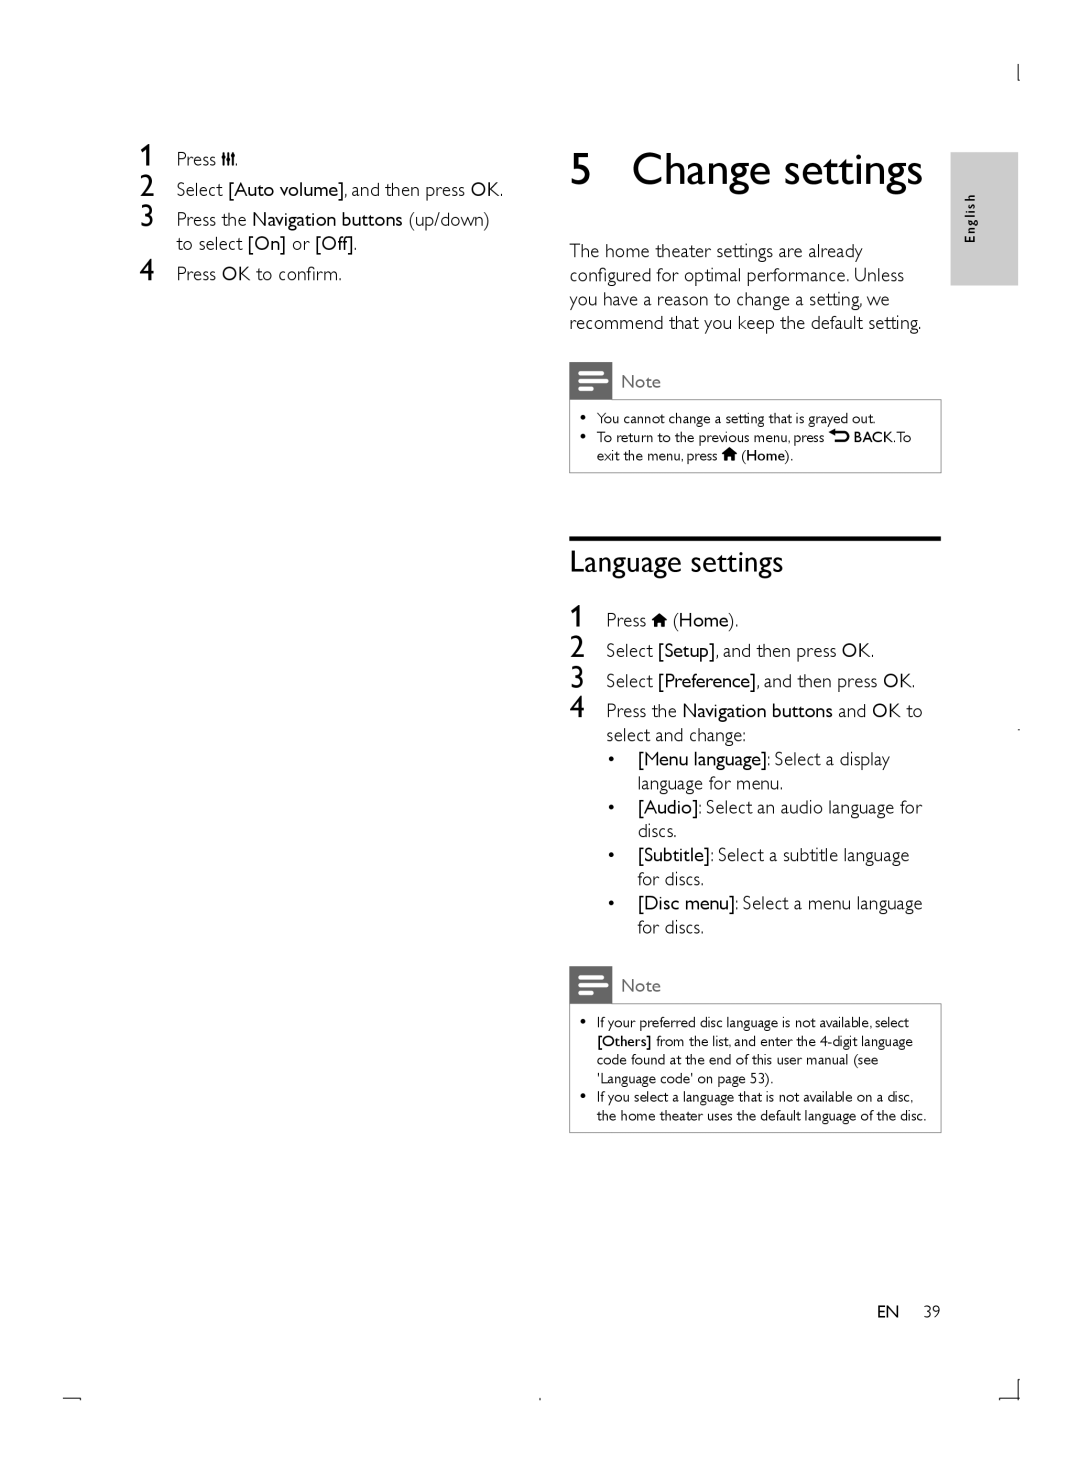 Philips HTB5544D manuel dutilisation Change settings, Language settings 